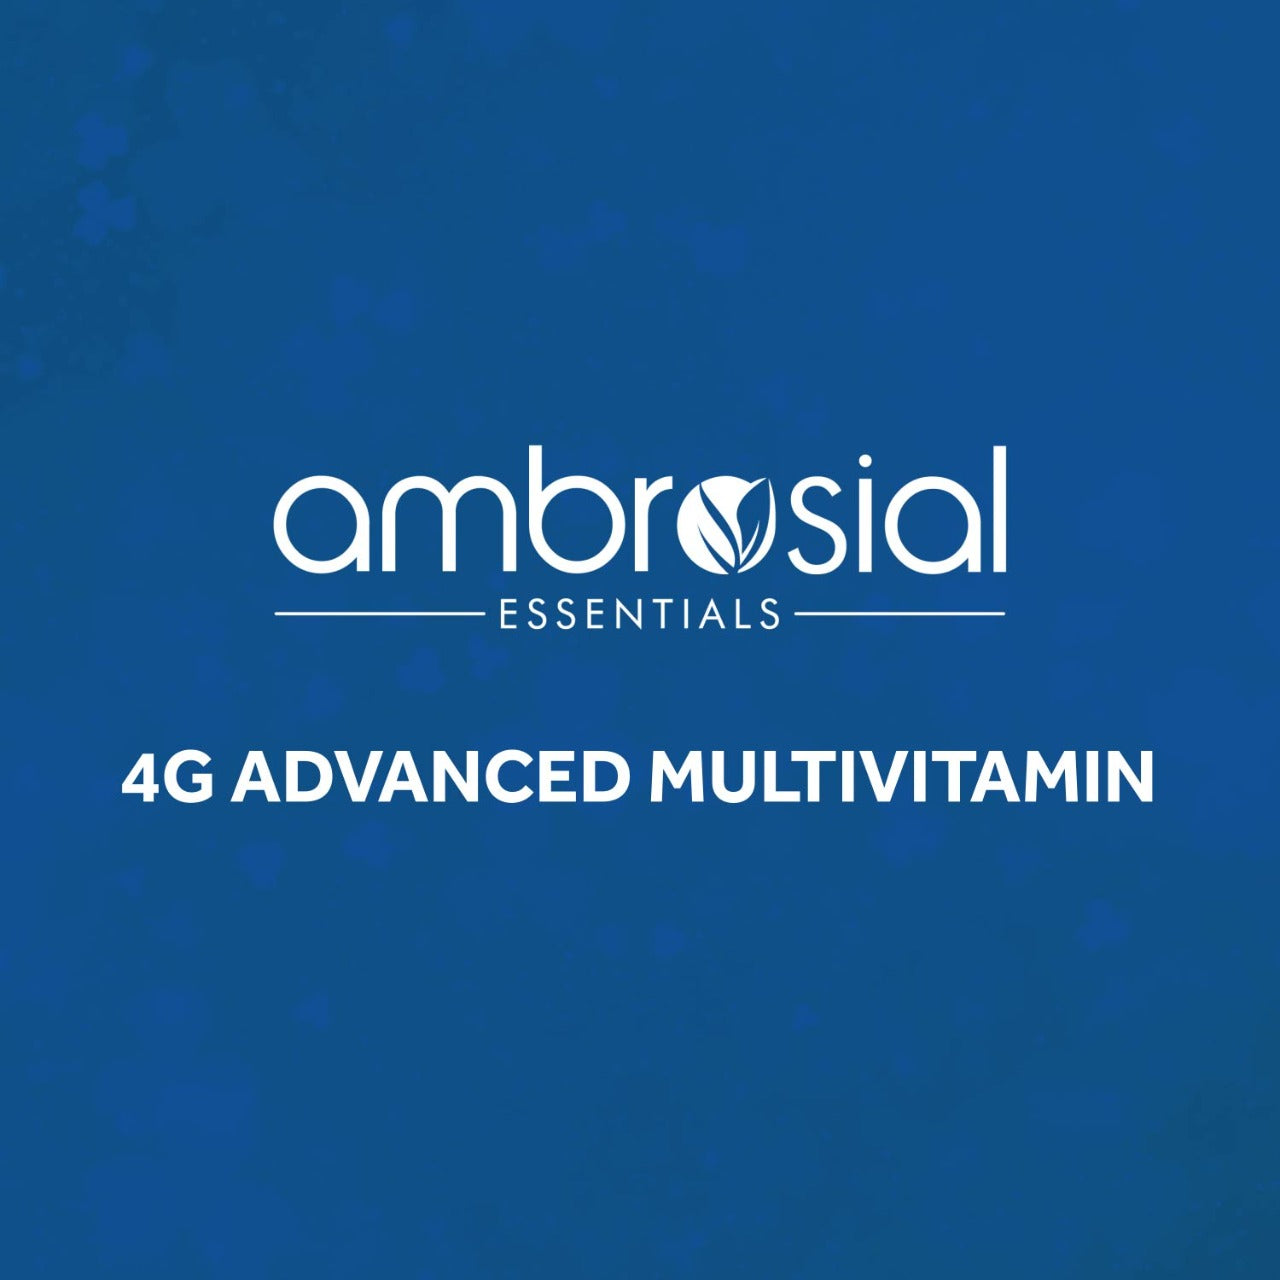 Ambrosial 4G Advanced multivitamin text